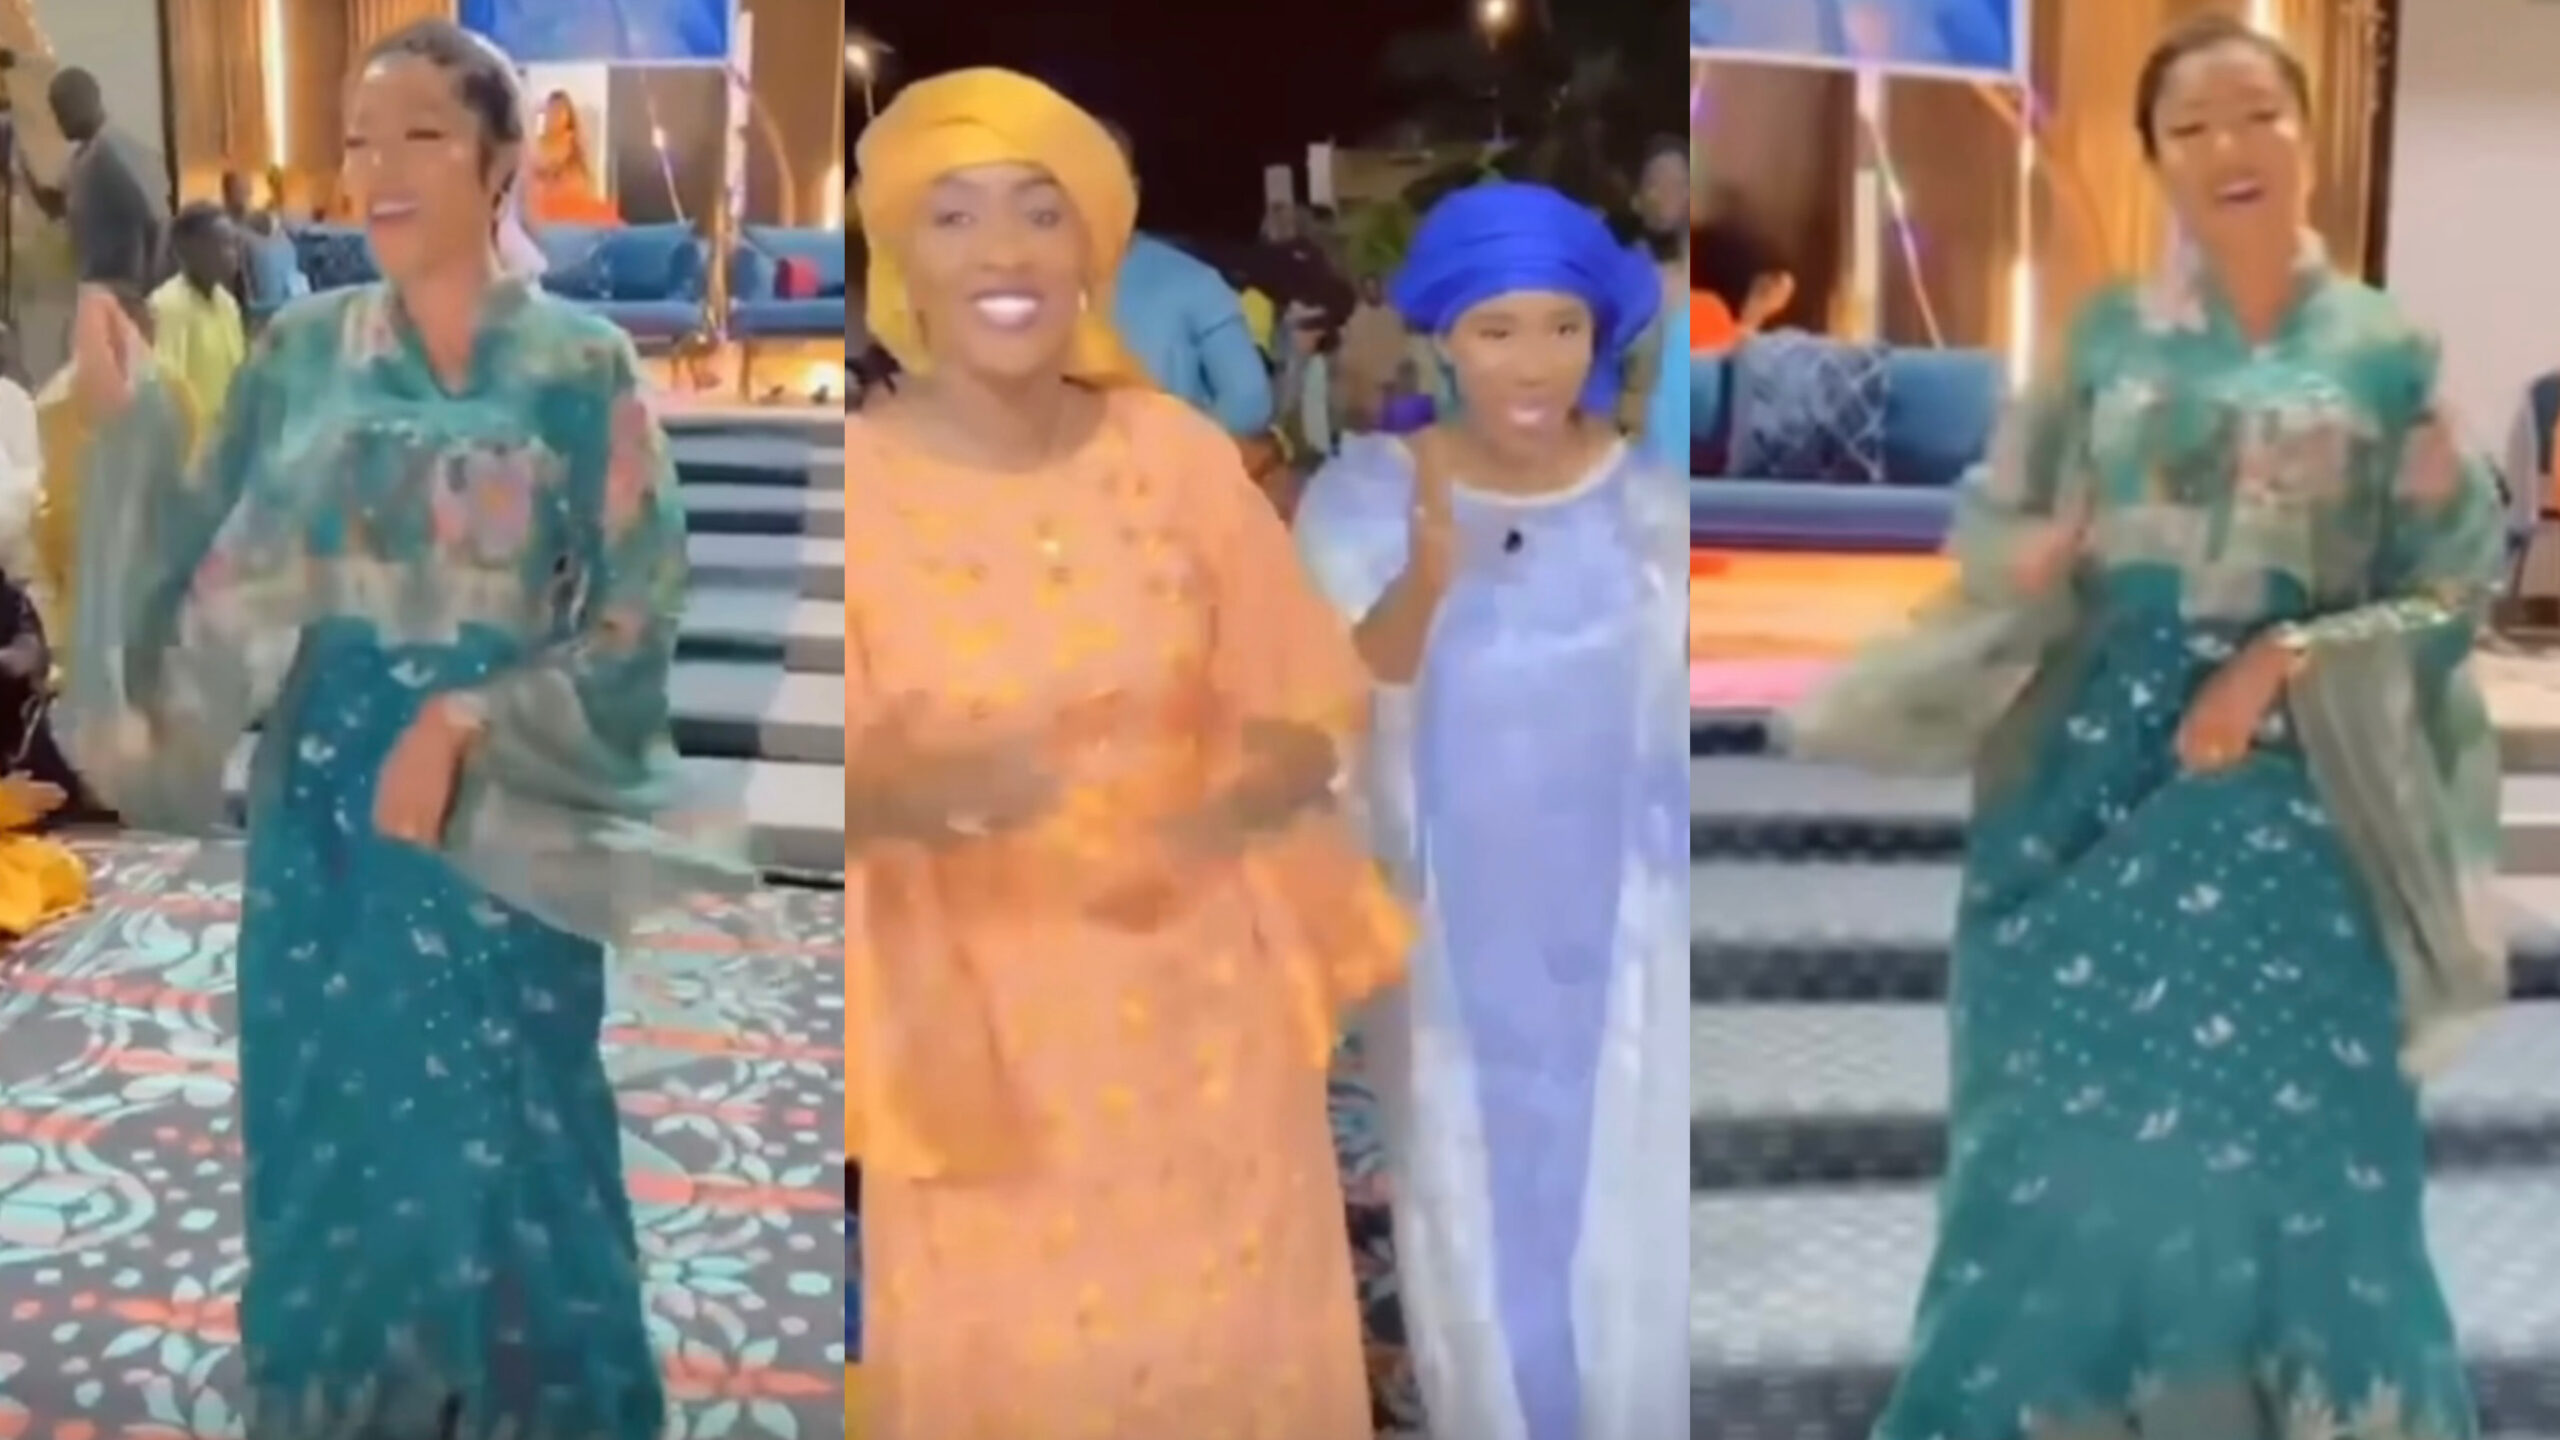 (Video) – Ziar du 03 Juin: Sokhna Aida Diallo offre une danse somptueuse à ses talibés qui en tombent.